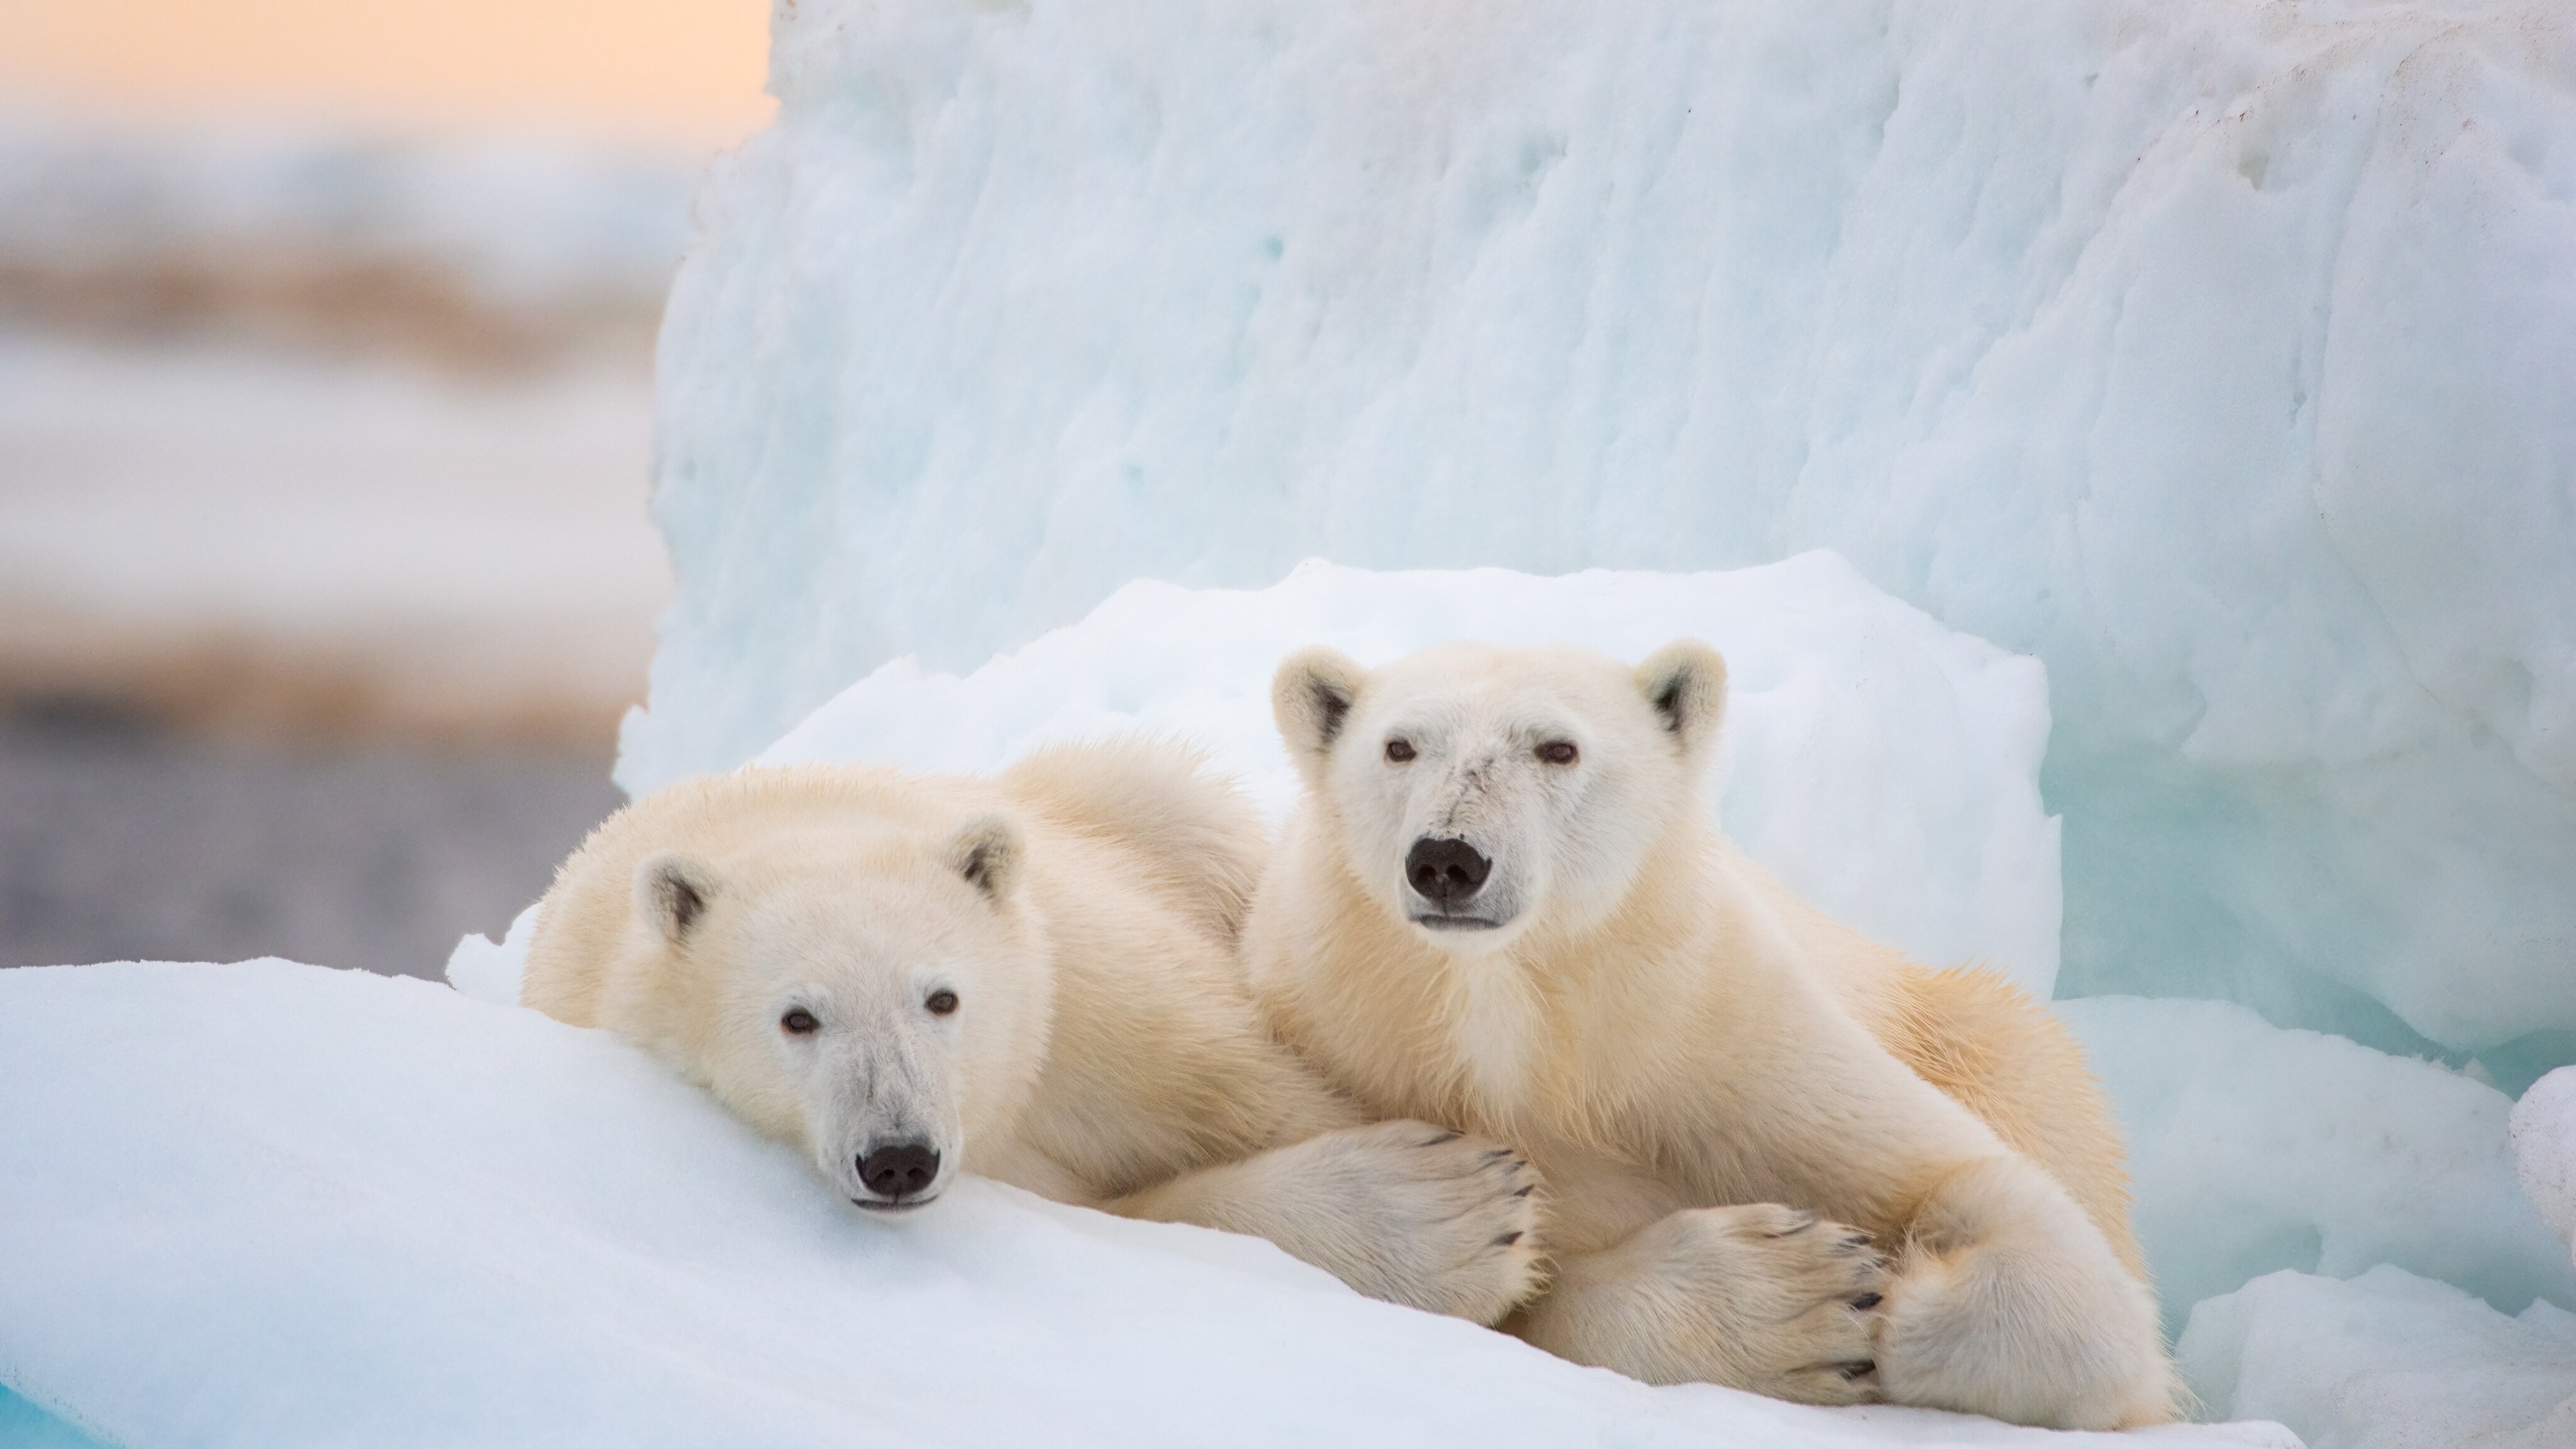 “Polar Bear” Premieres On Disney+ This Earth Day, April 22